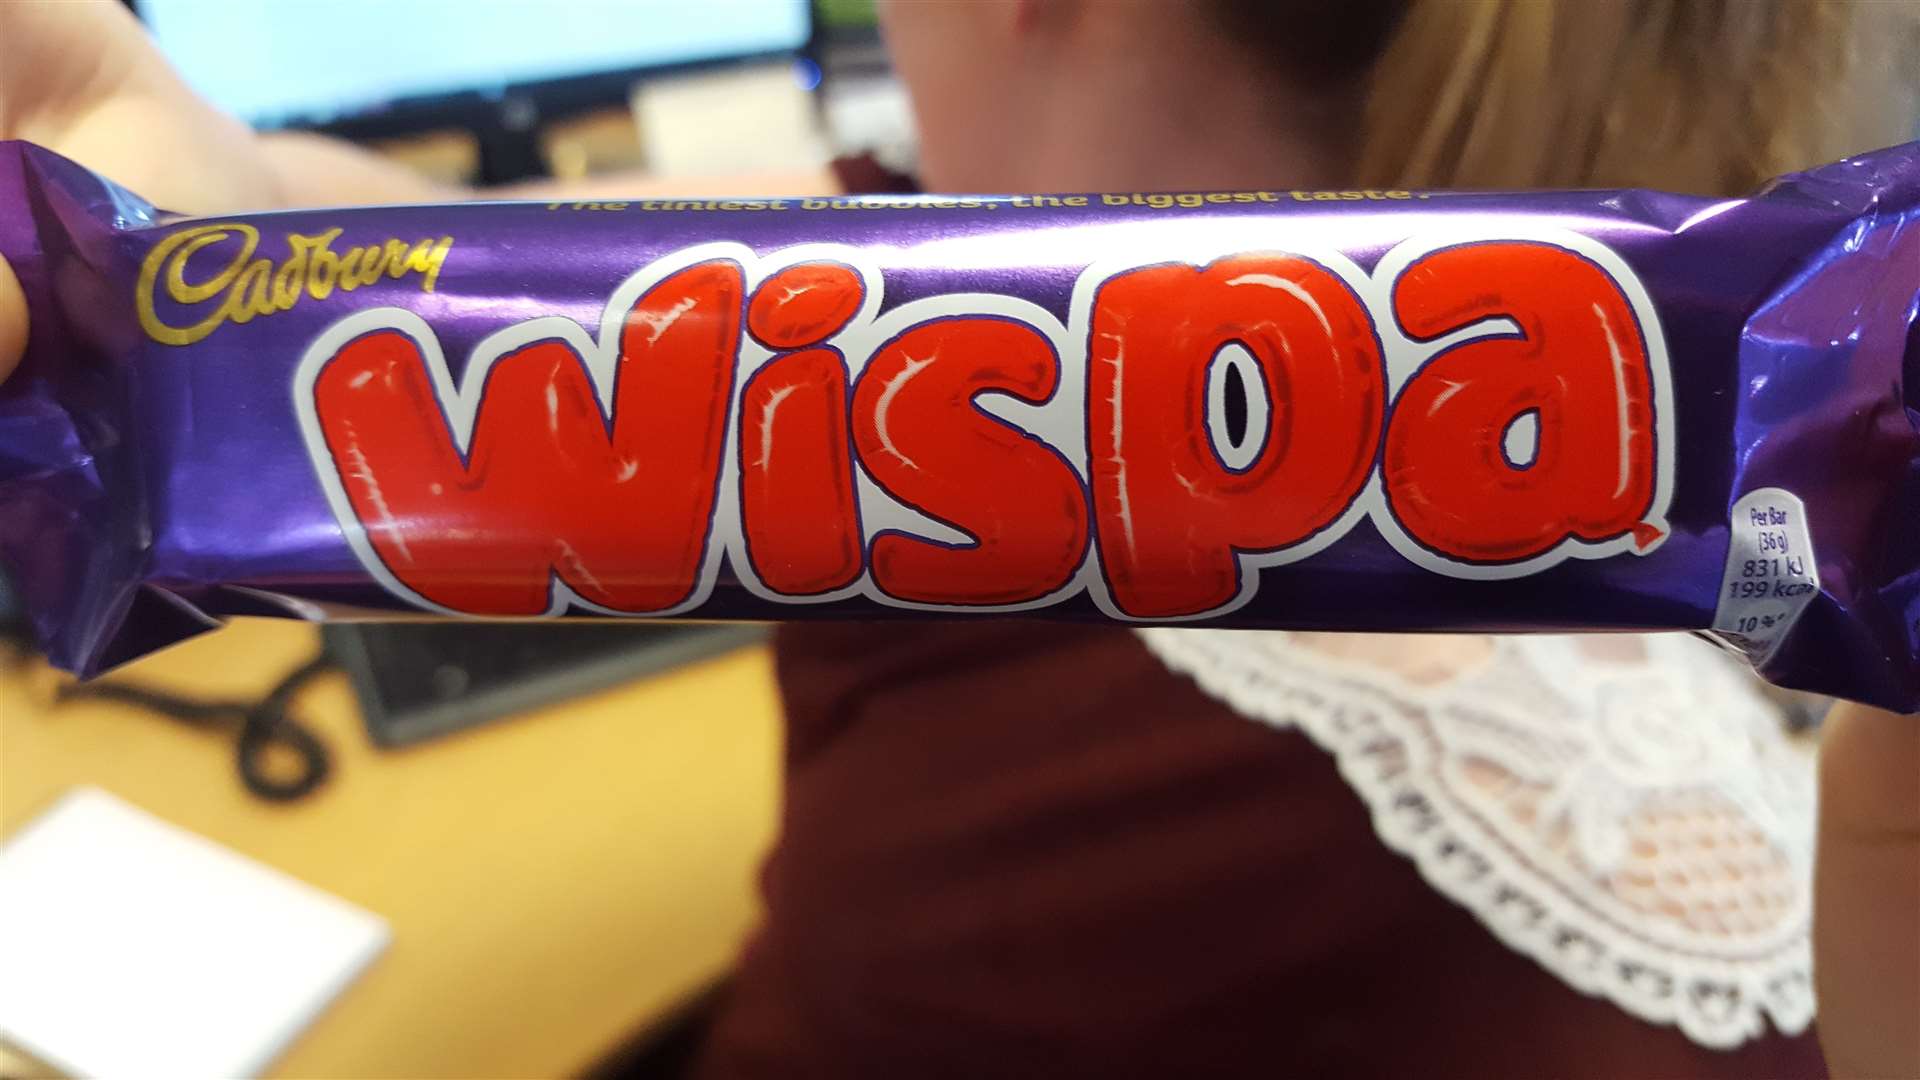 While Wispa has made a comeback, the Wispa Mint is yet to return